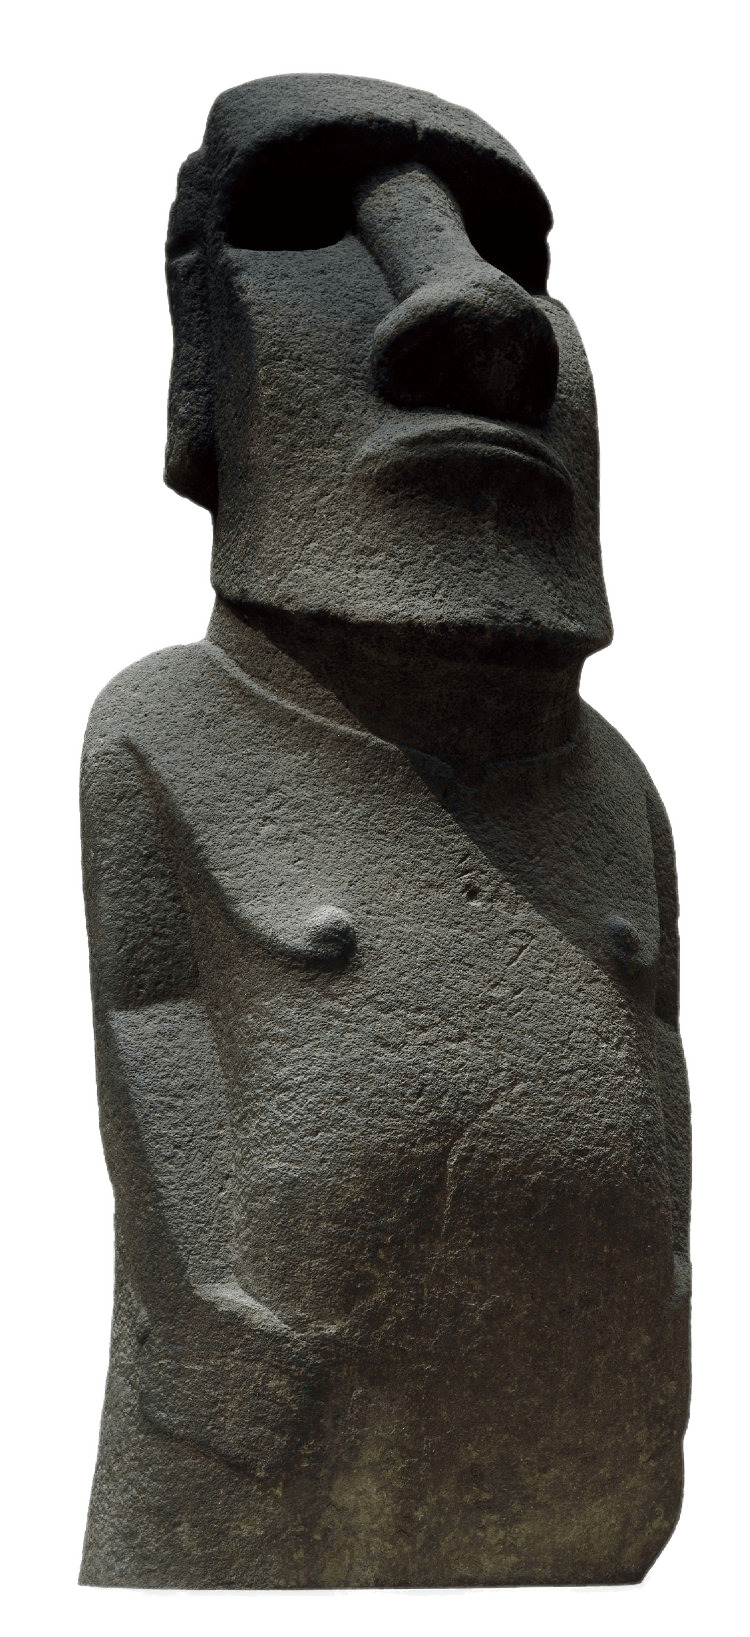 Giant Moai Statue icons